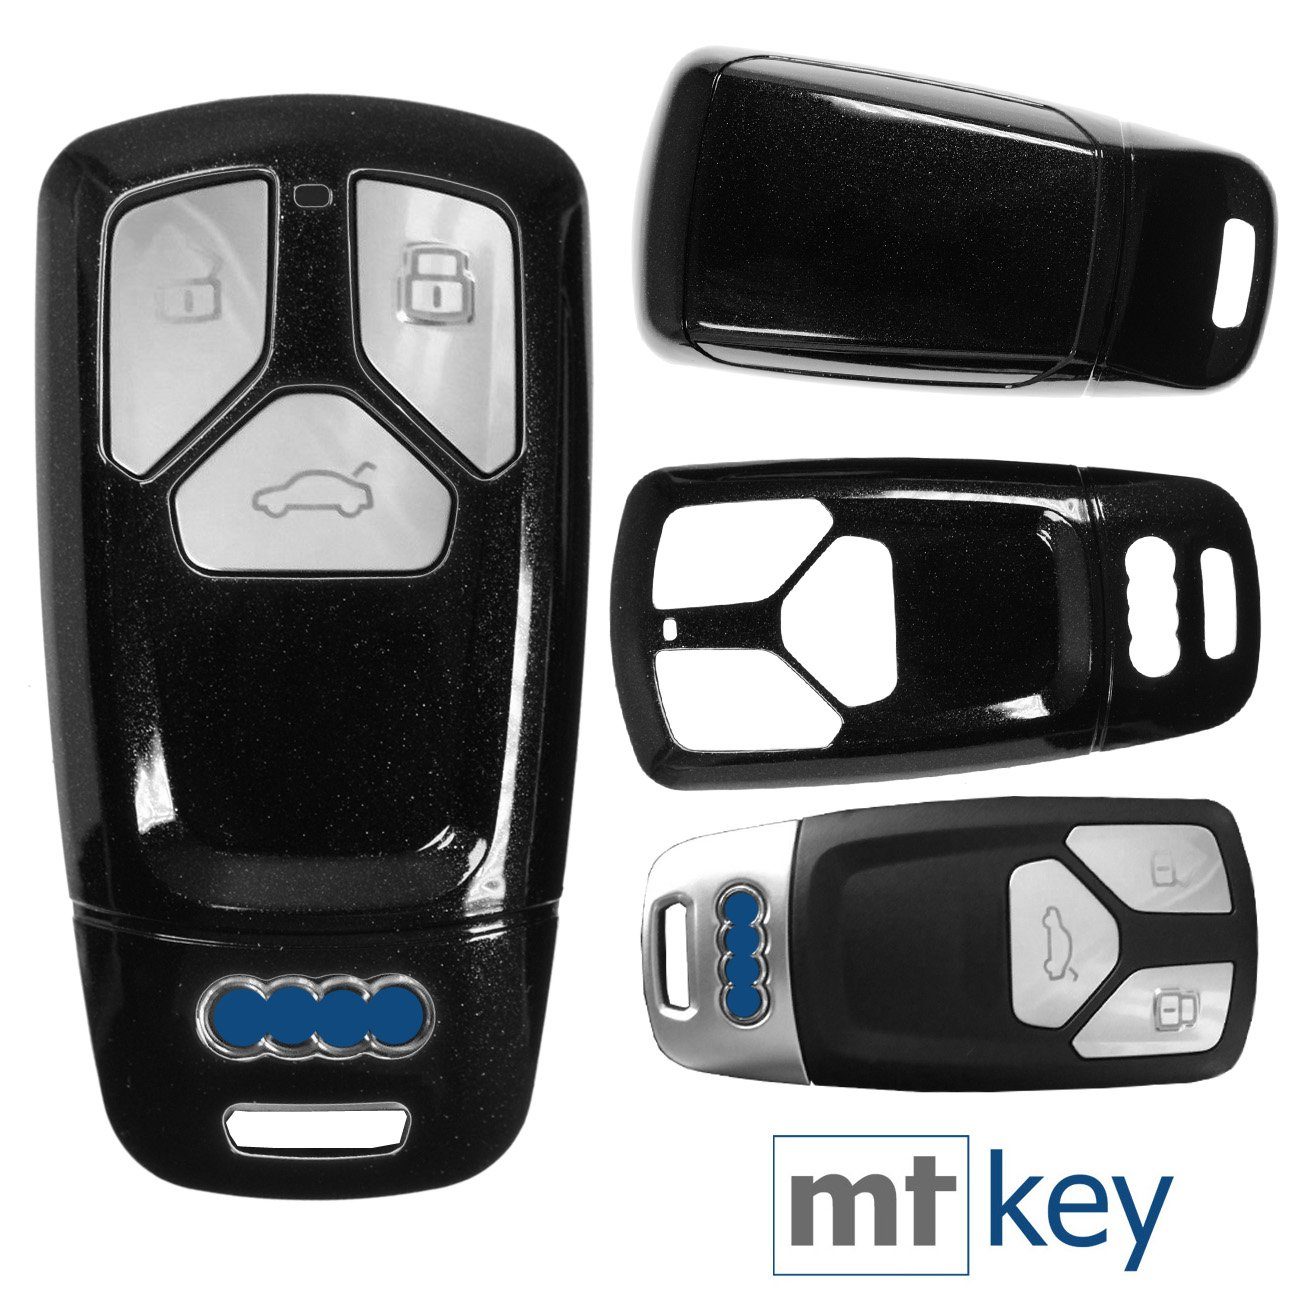 A8 KEYLESS A5 Q5 Schwarz, SMARTKEY Q2 A4 A7 Q7 Q8 mt-key Schutzhülle Autoschlüssel für Audi TT A6 Metallic Hardcover Schlüsseltasche